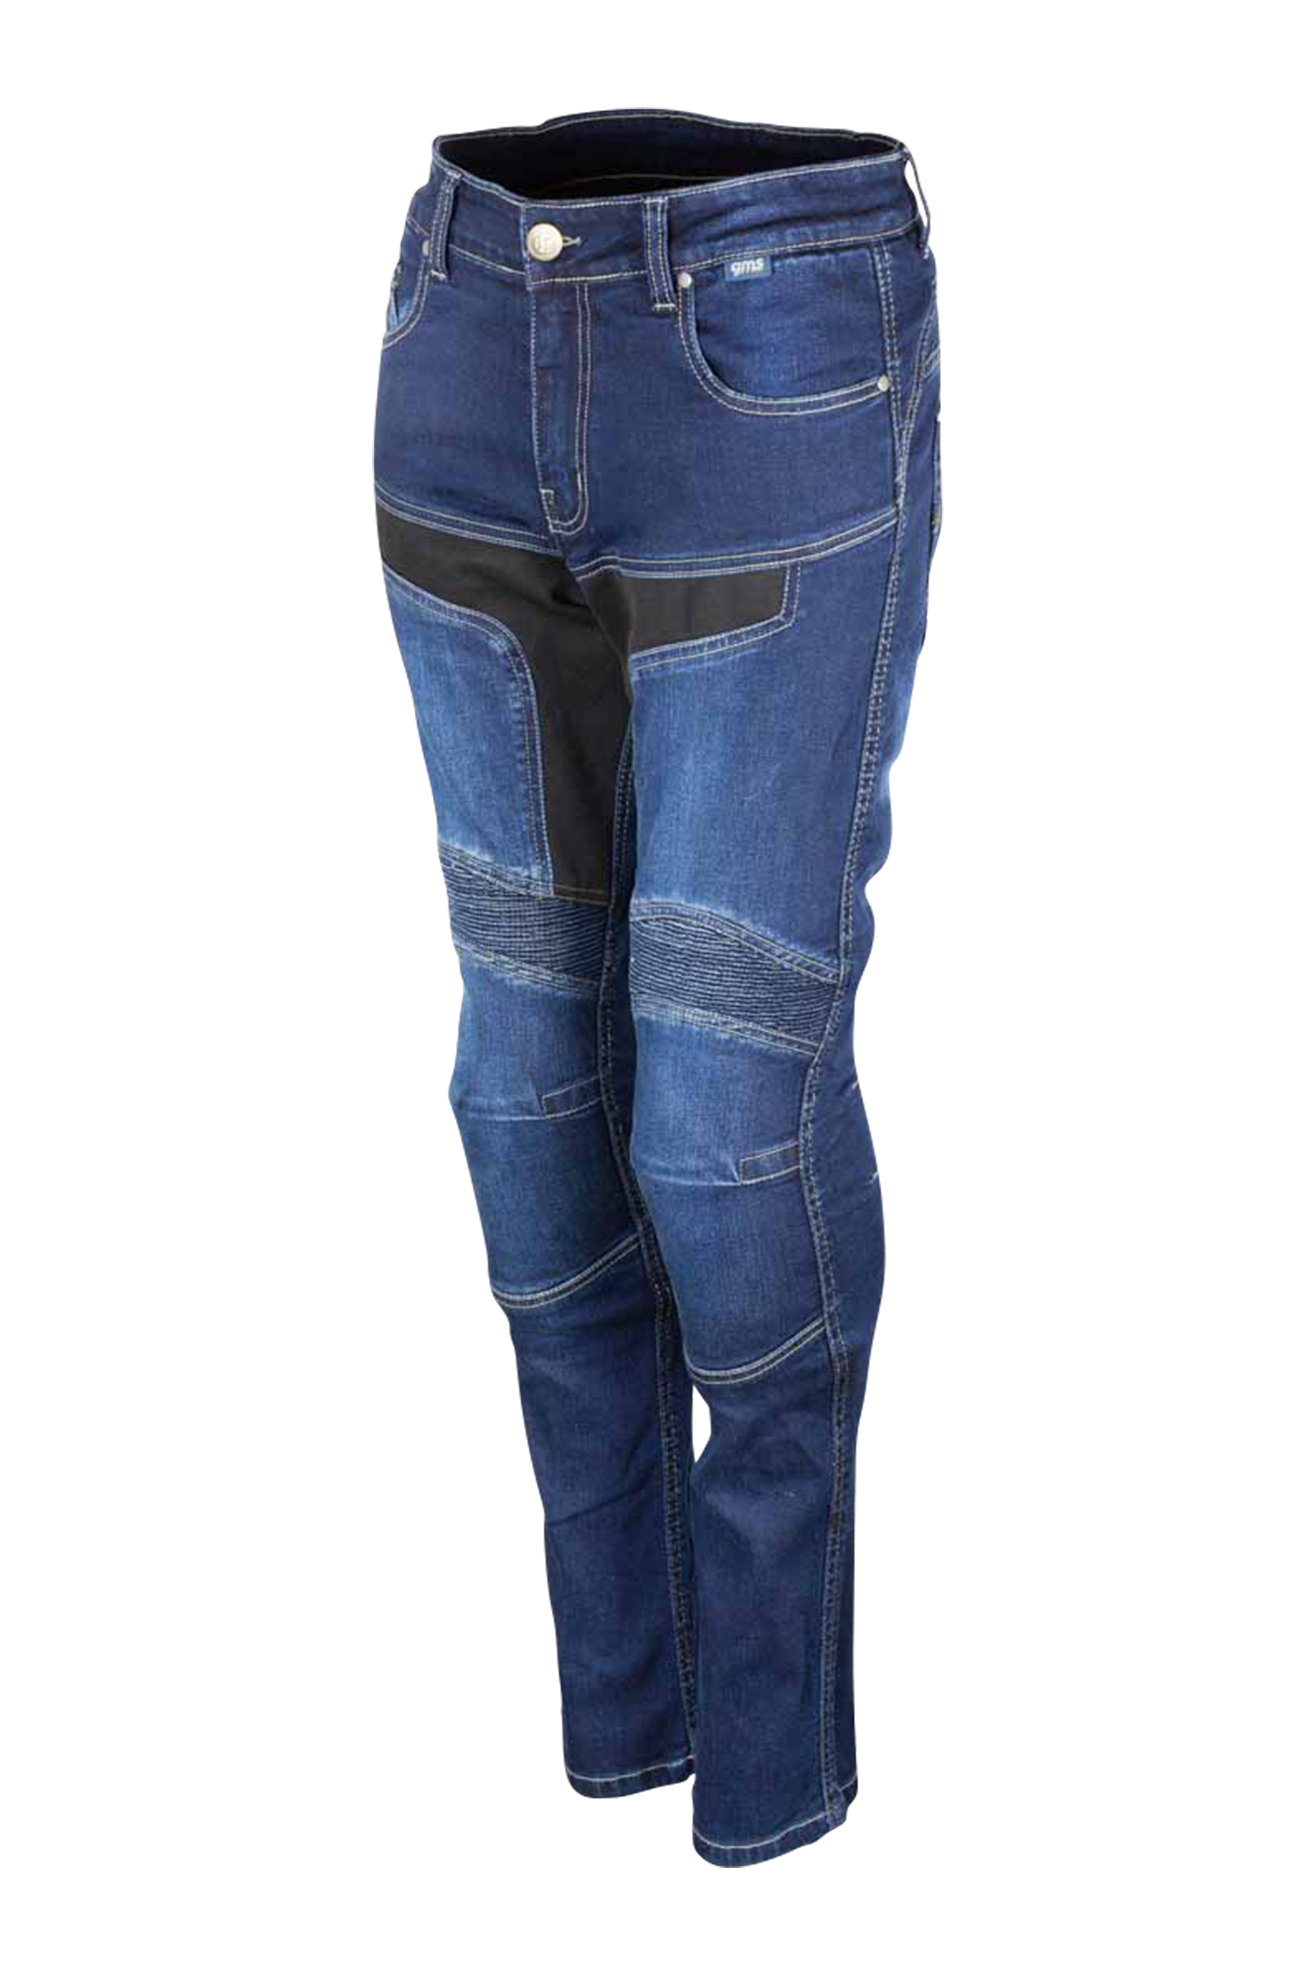 GMS Pantalones de Moto para Mujer  Viper Azul Oscuro